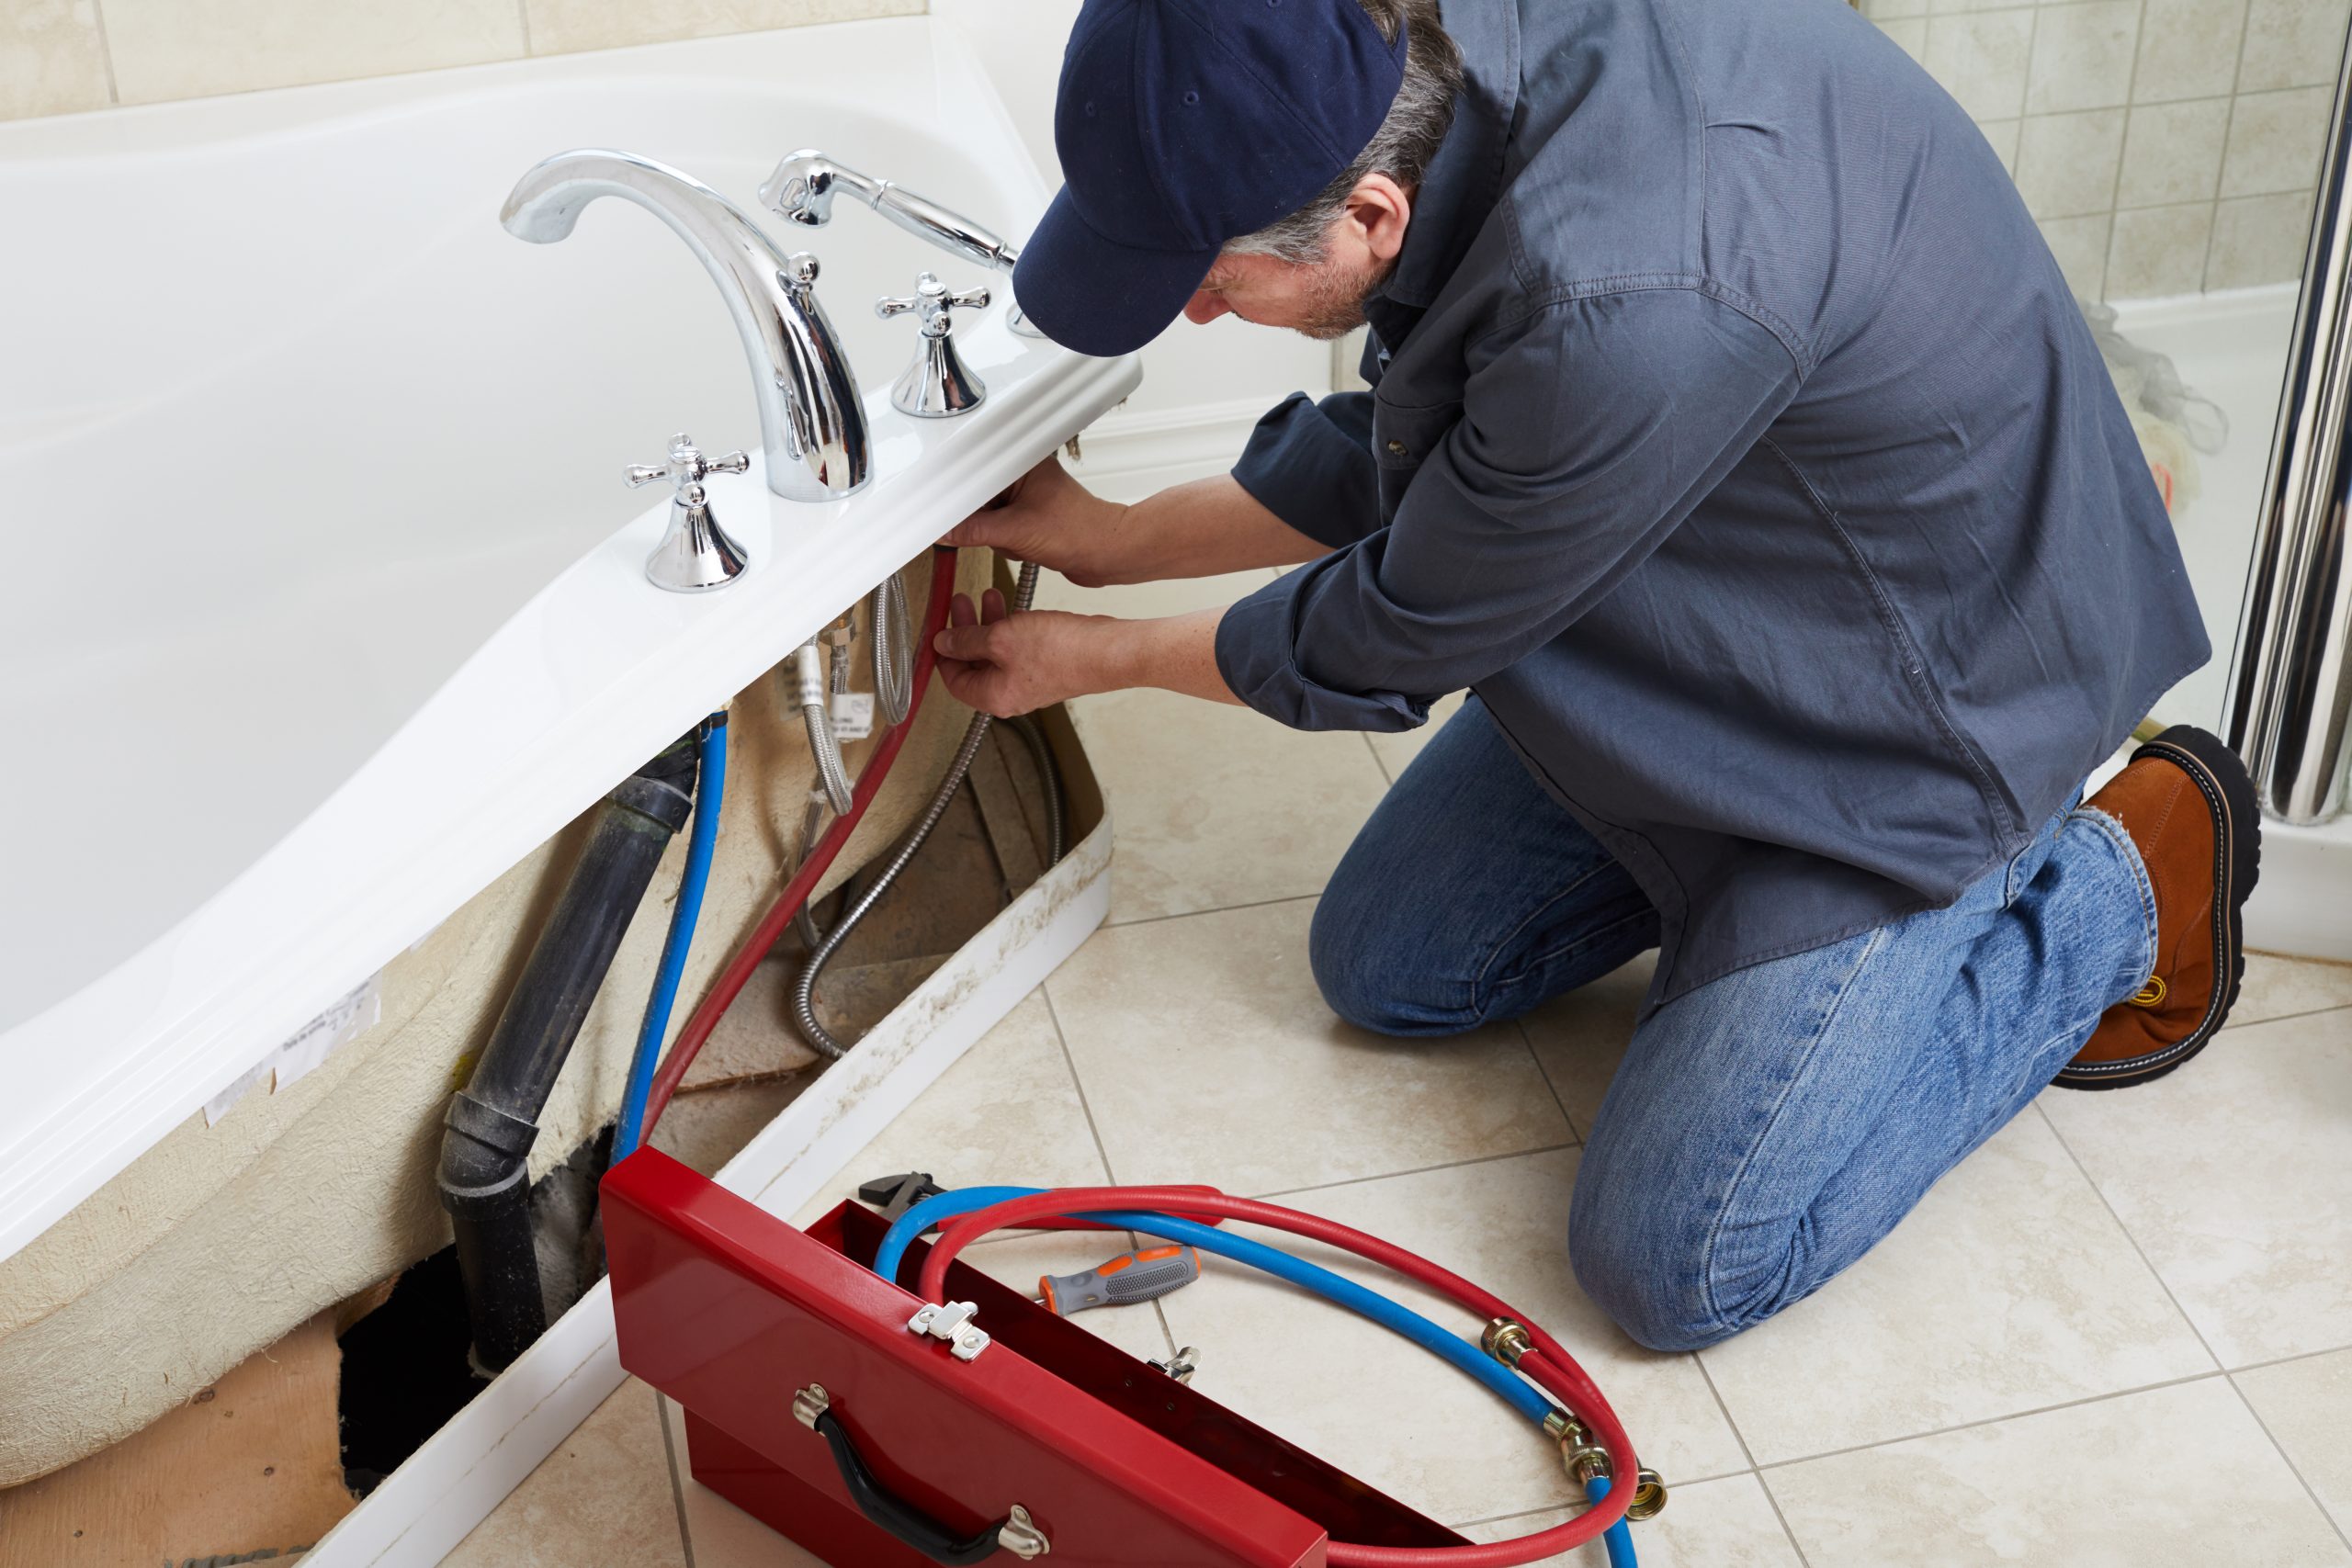 Professional plumber doing plumbing renovation in bathroom.